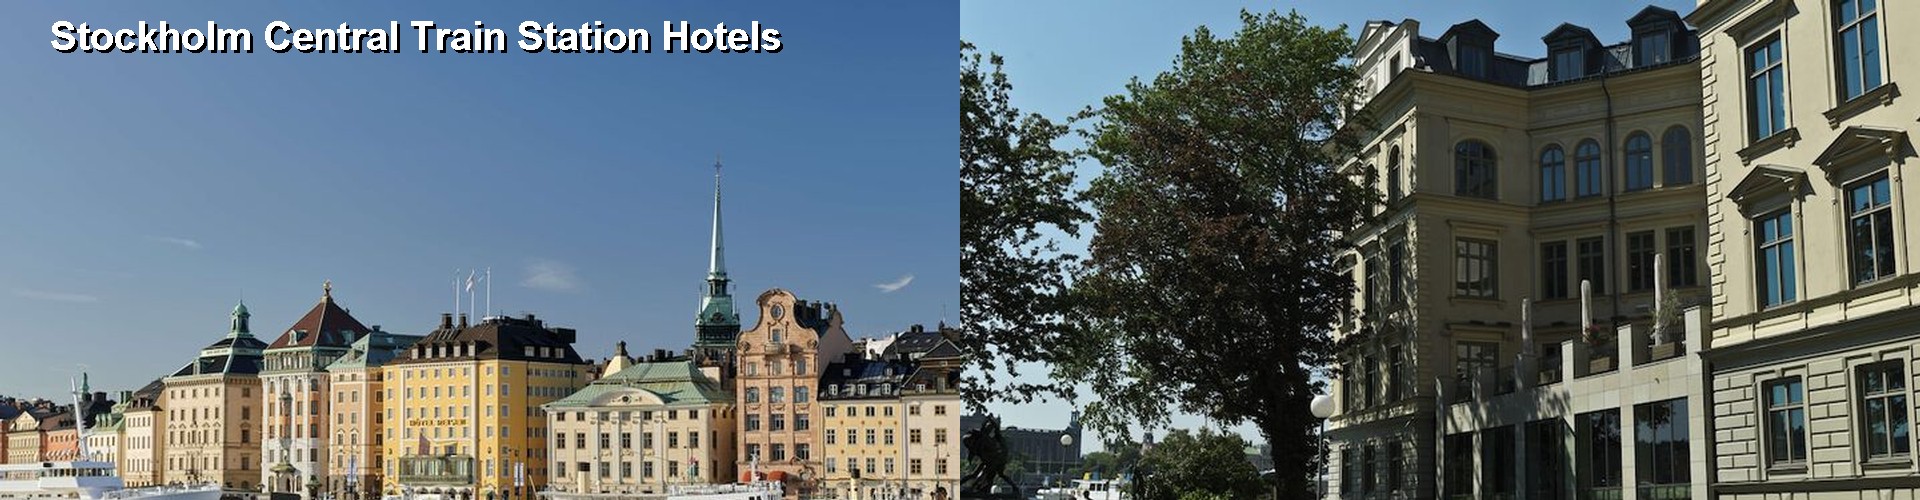 5 Best Hotels near Stockholm Central Train Station